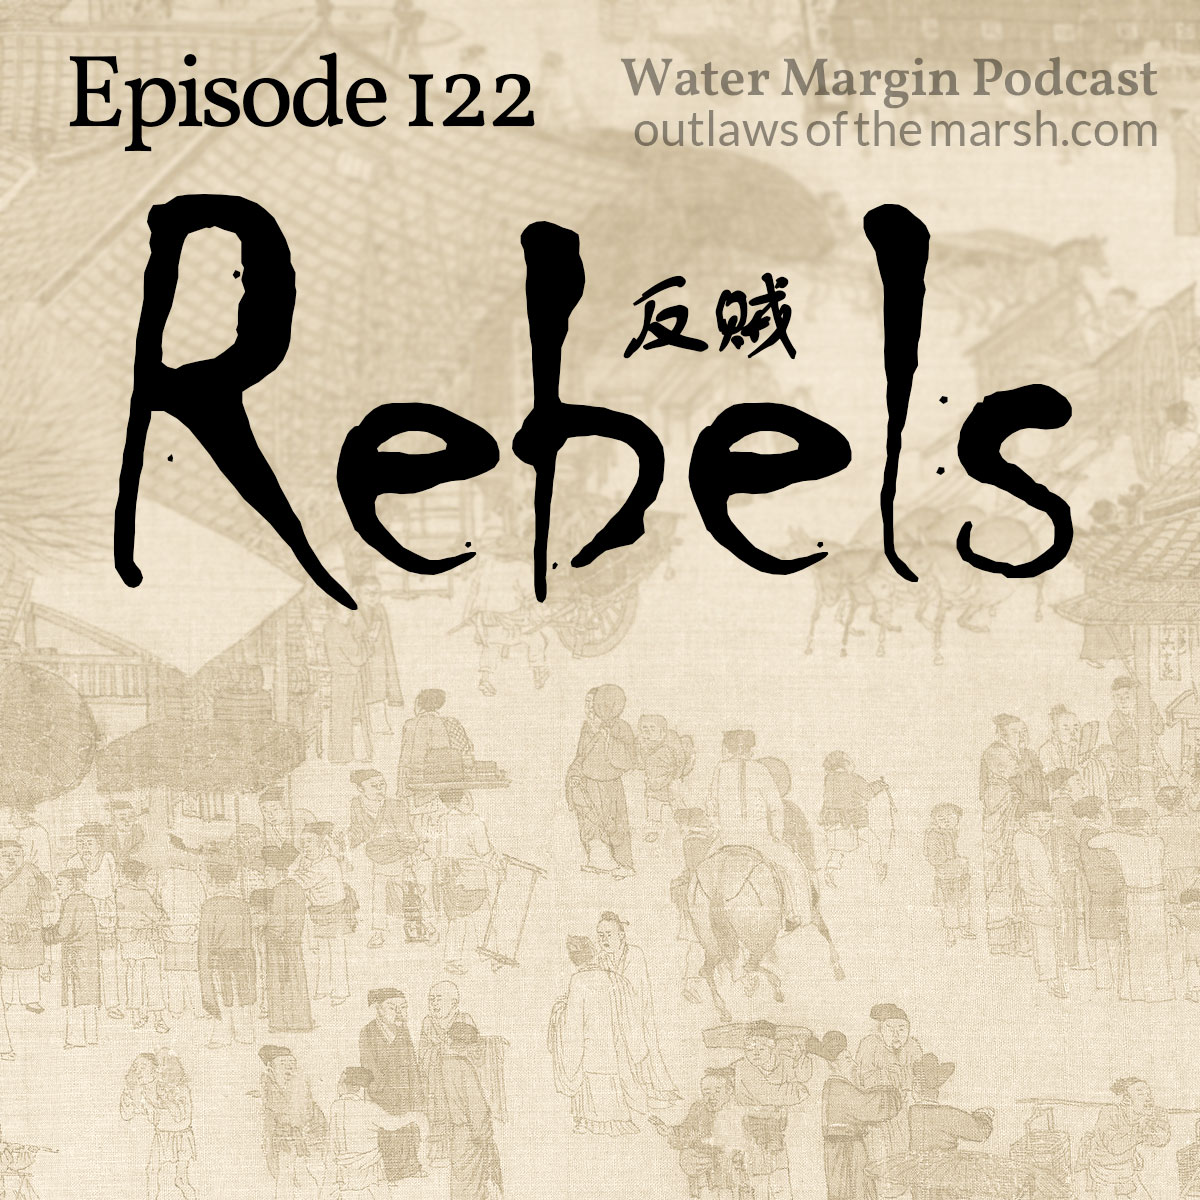 Water Margin Podcast: Episode 122